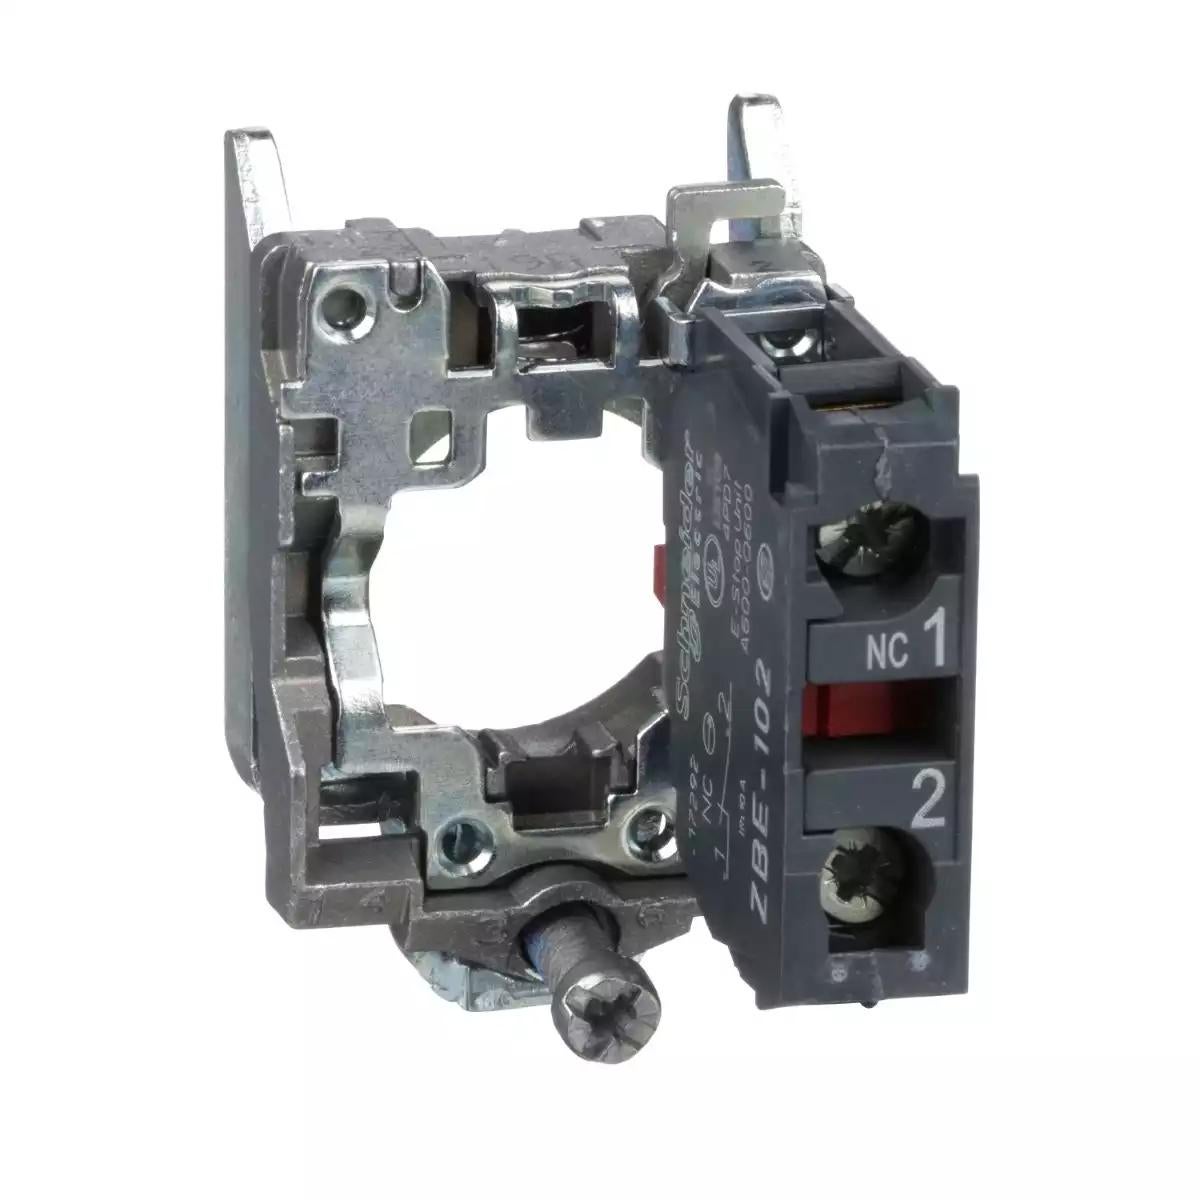 Single contact block with body fixing collar, Harmony XB4, metal, screw clamp terminal, 1NC